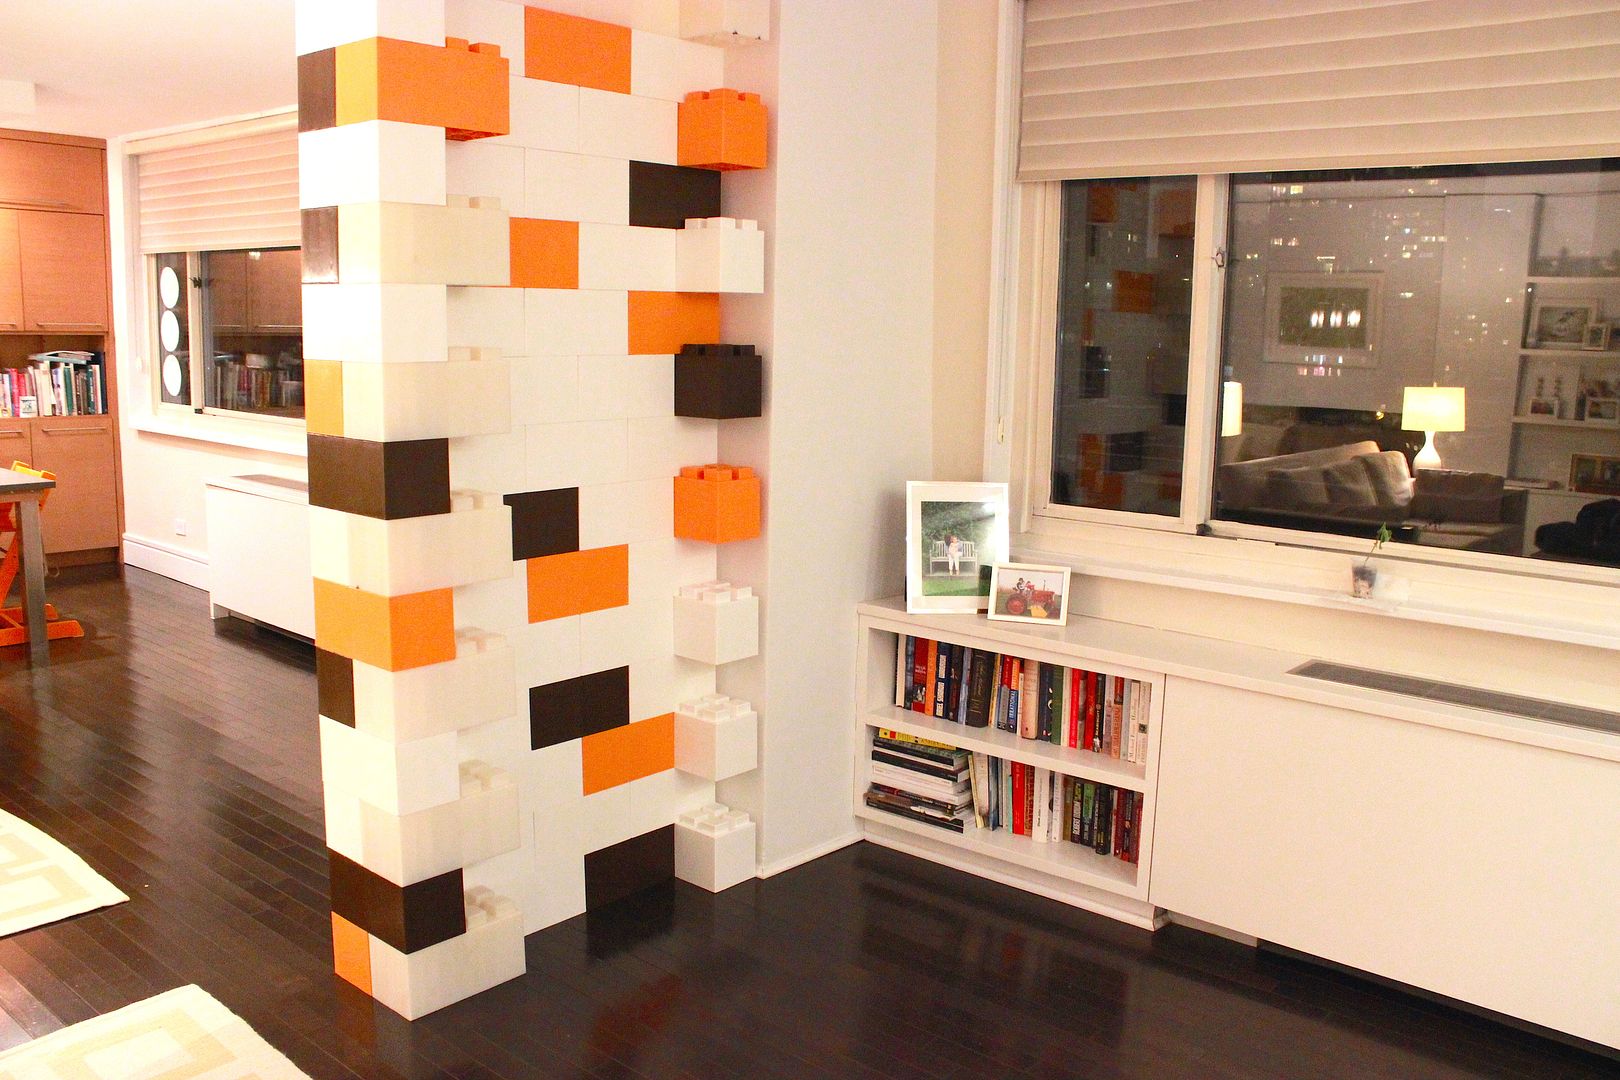 Design inspiration: Use EverBlocks modular blocks to make a LEGO style room divider